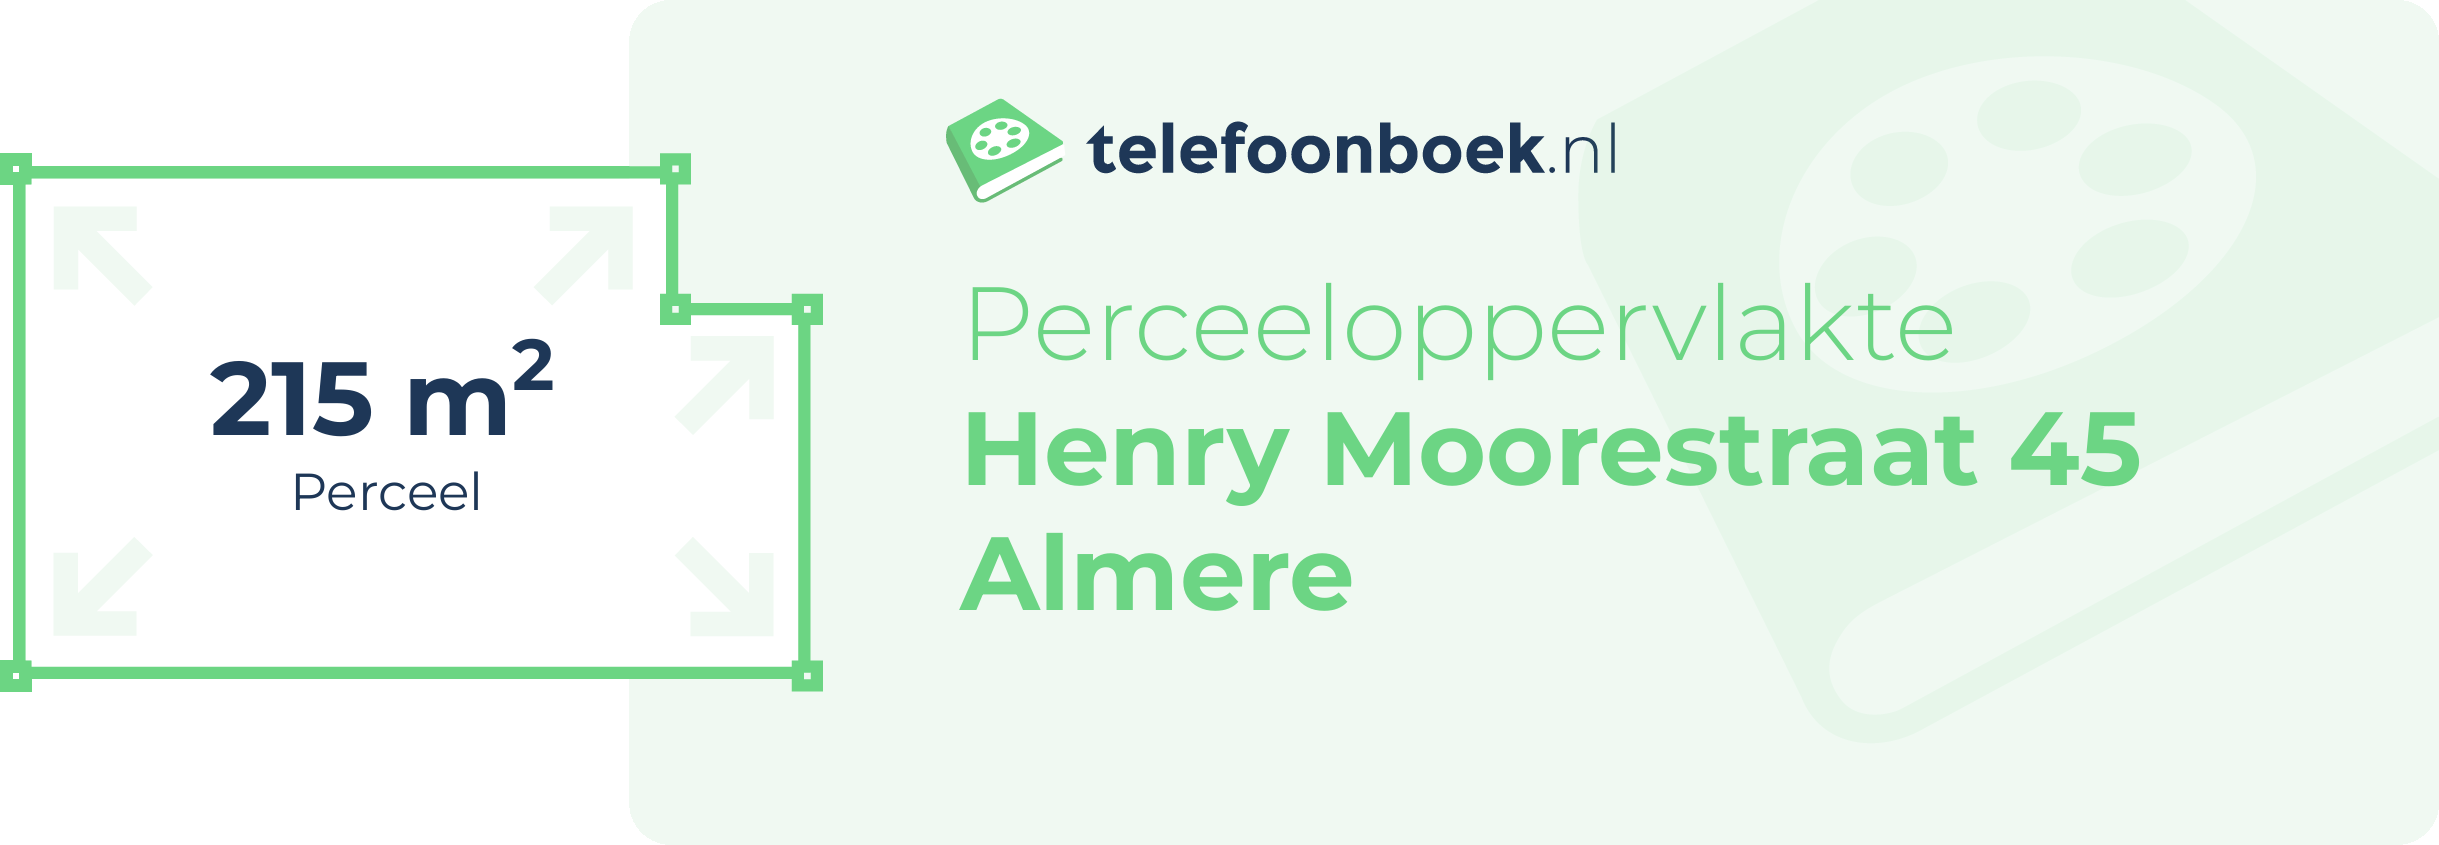 Perceeloppervlakte Henry Moorestraat 45 Almere